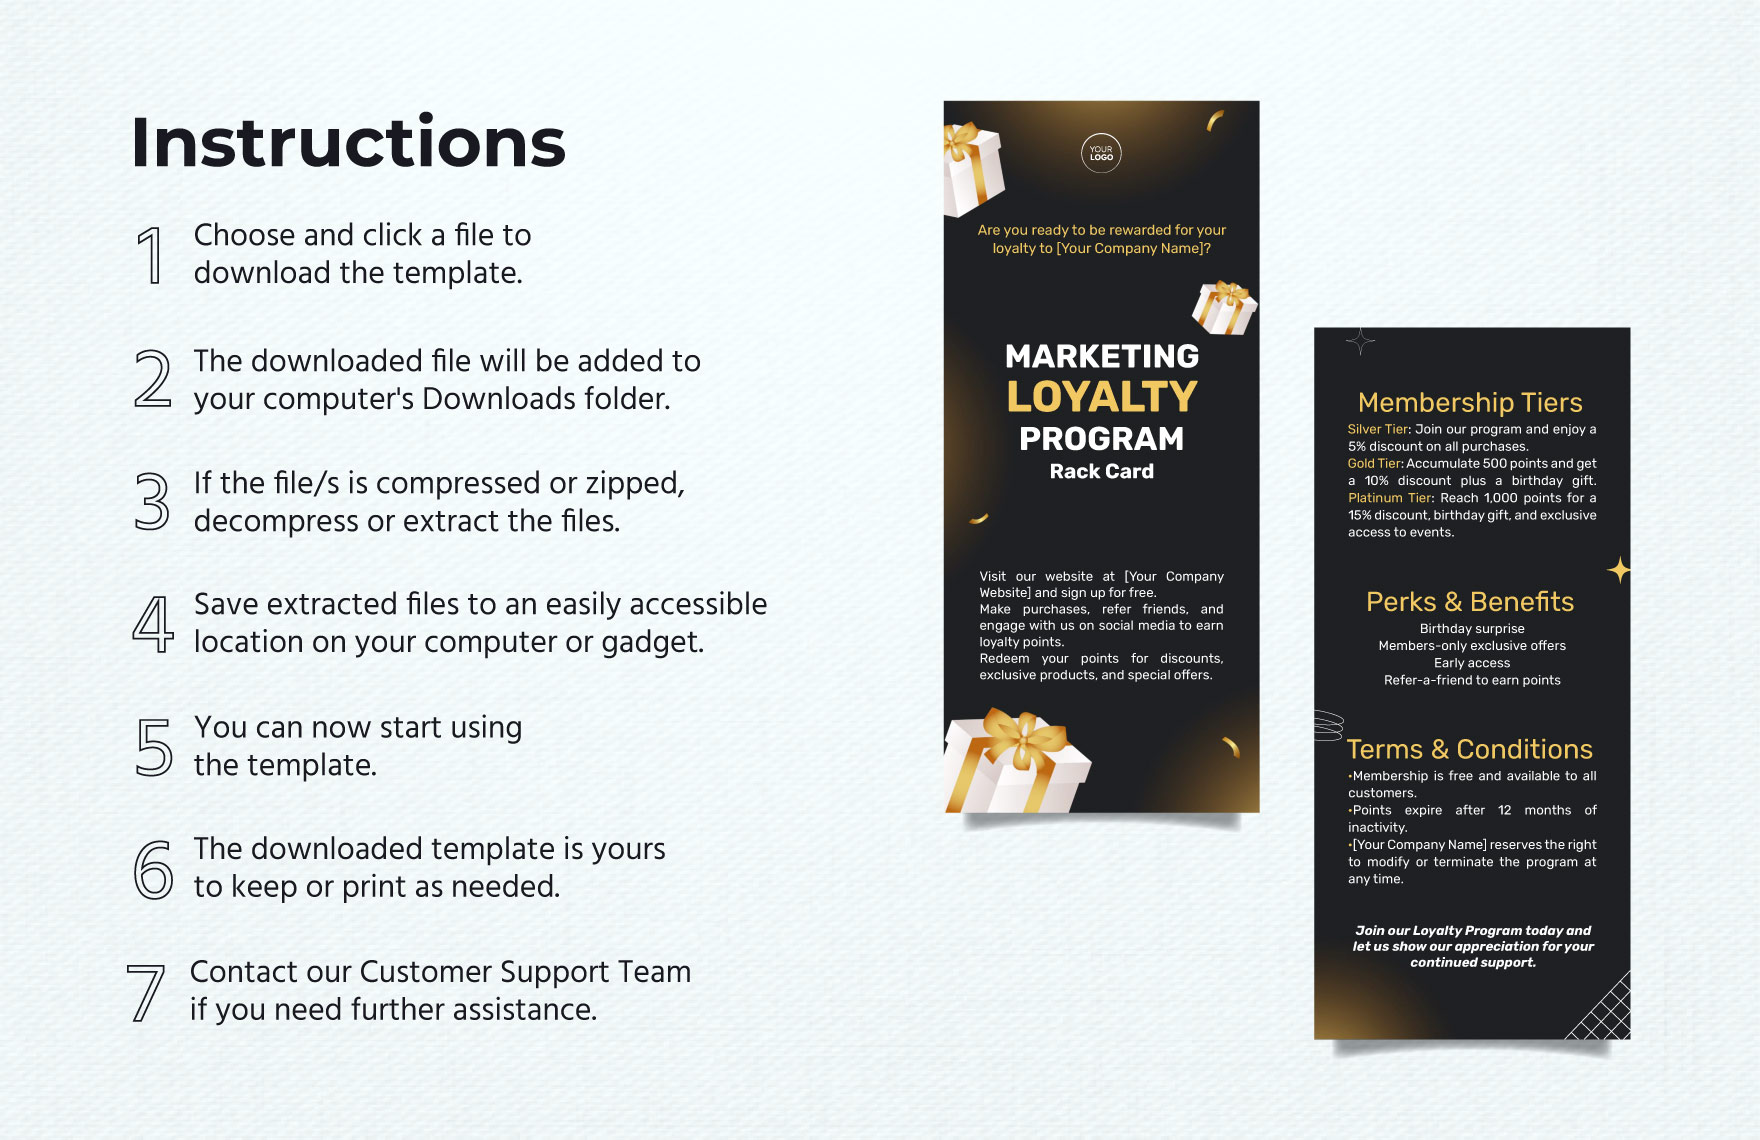 Marketing Loyalty Program Rack Card Template